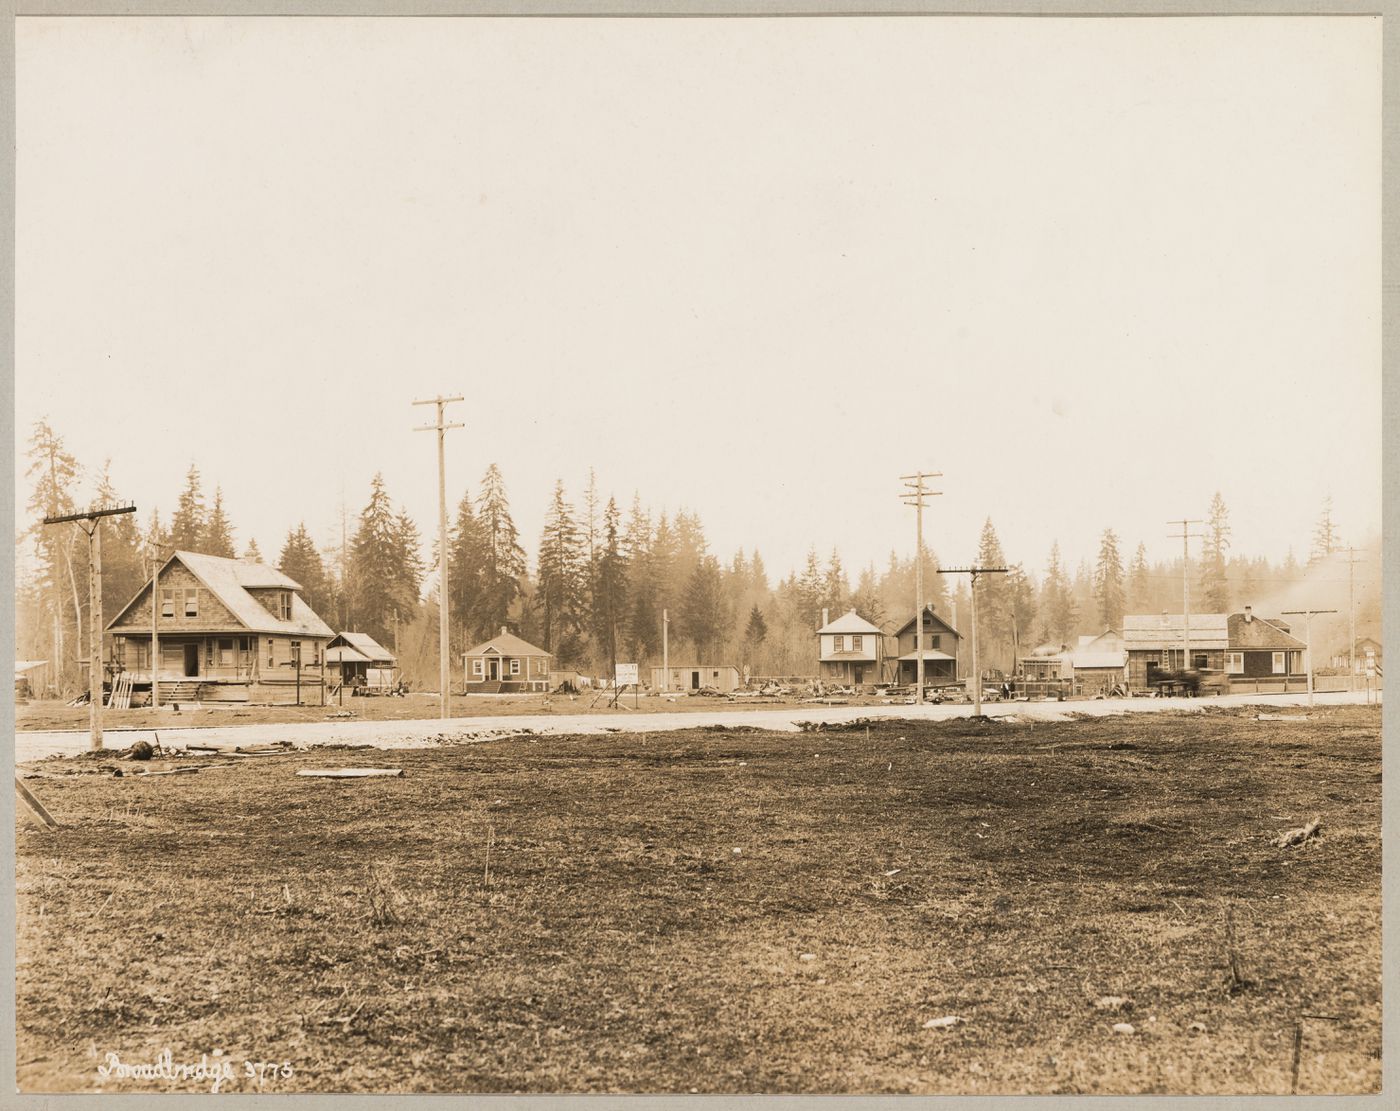 View of Flint Road showing Greenwood housing development, Coquitlam (now Port Coquitlam), British Columbia